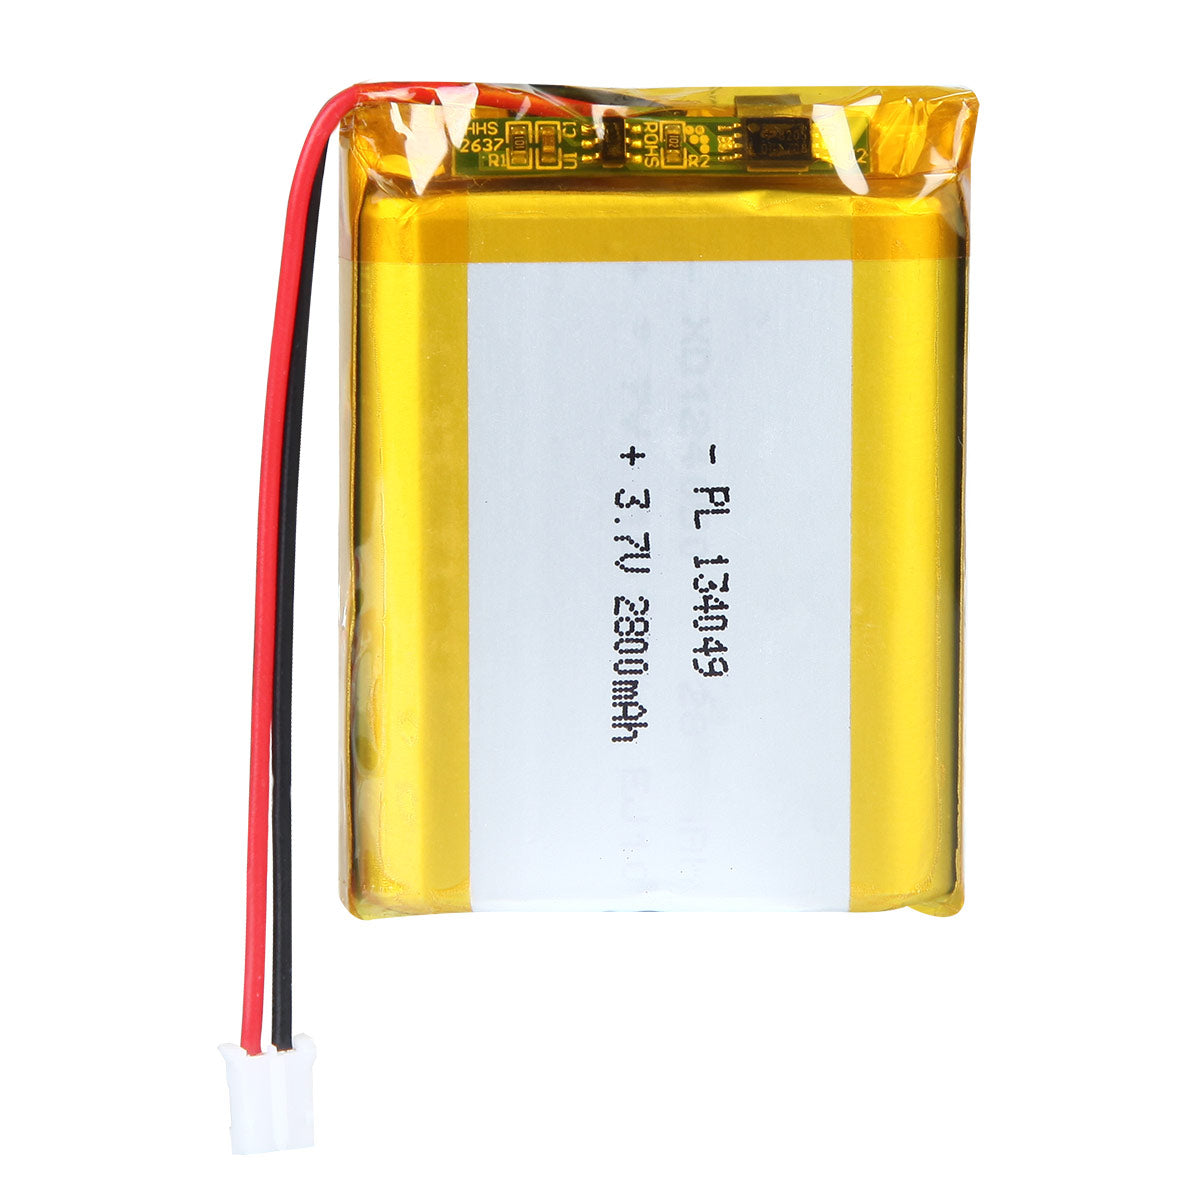 YDL 3.7V 2800mAh 134049 Batterie Lithium Polymère Rechargeable Longueur 51mm